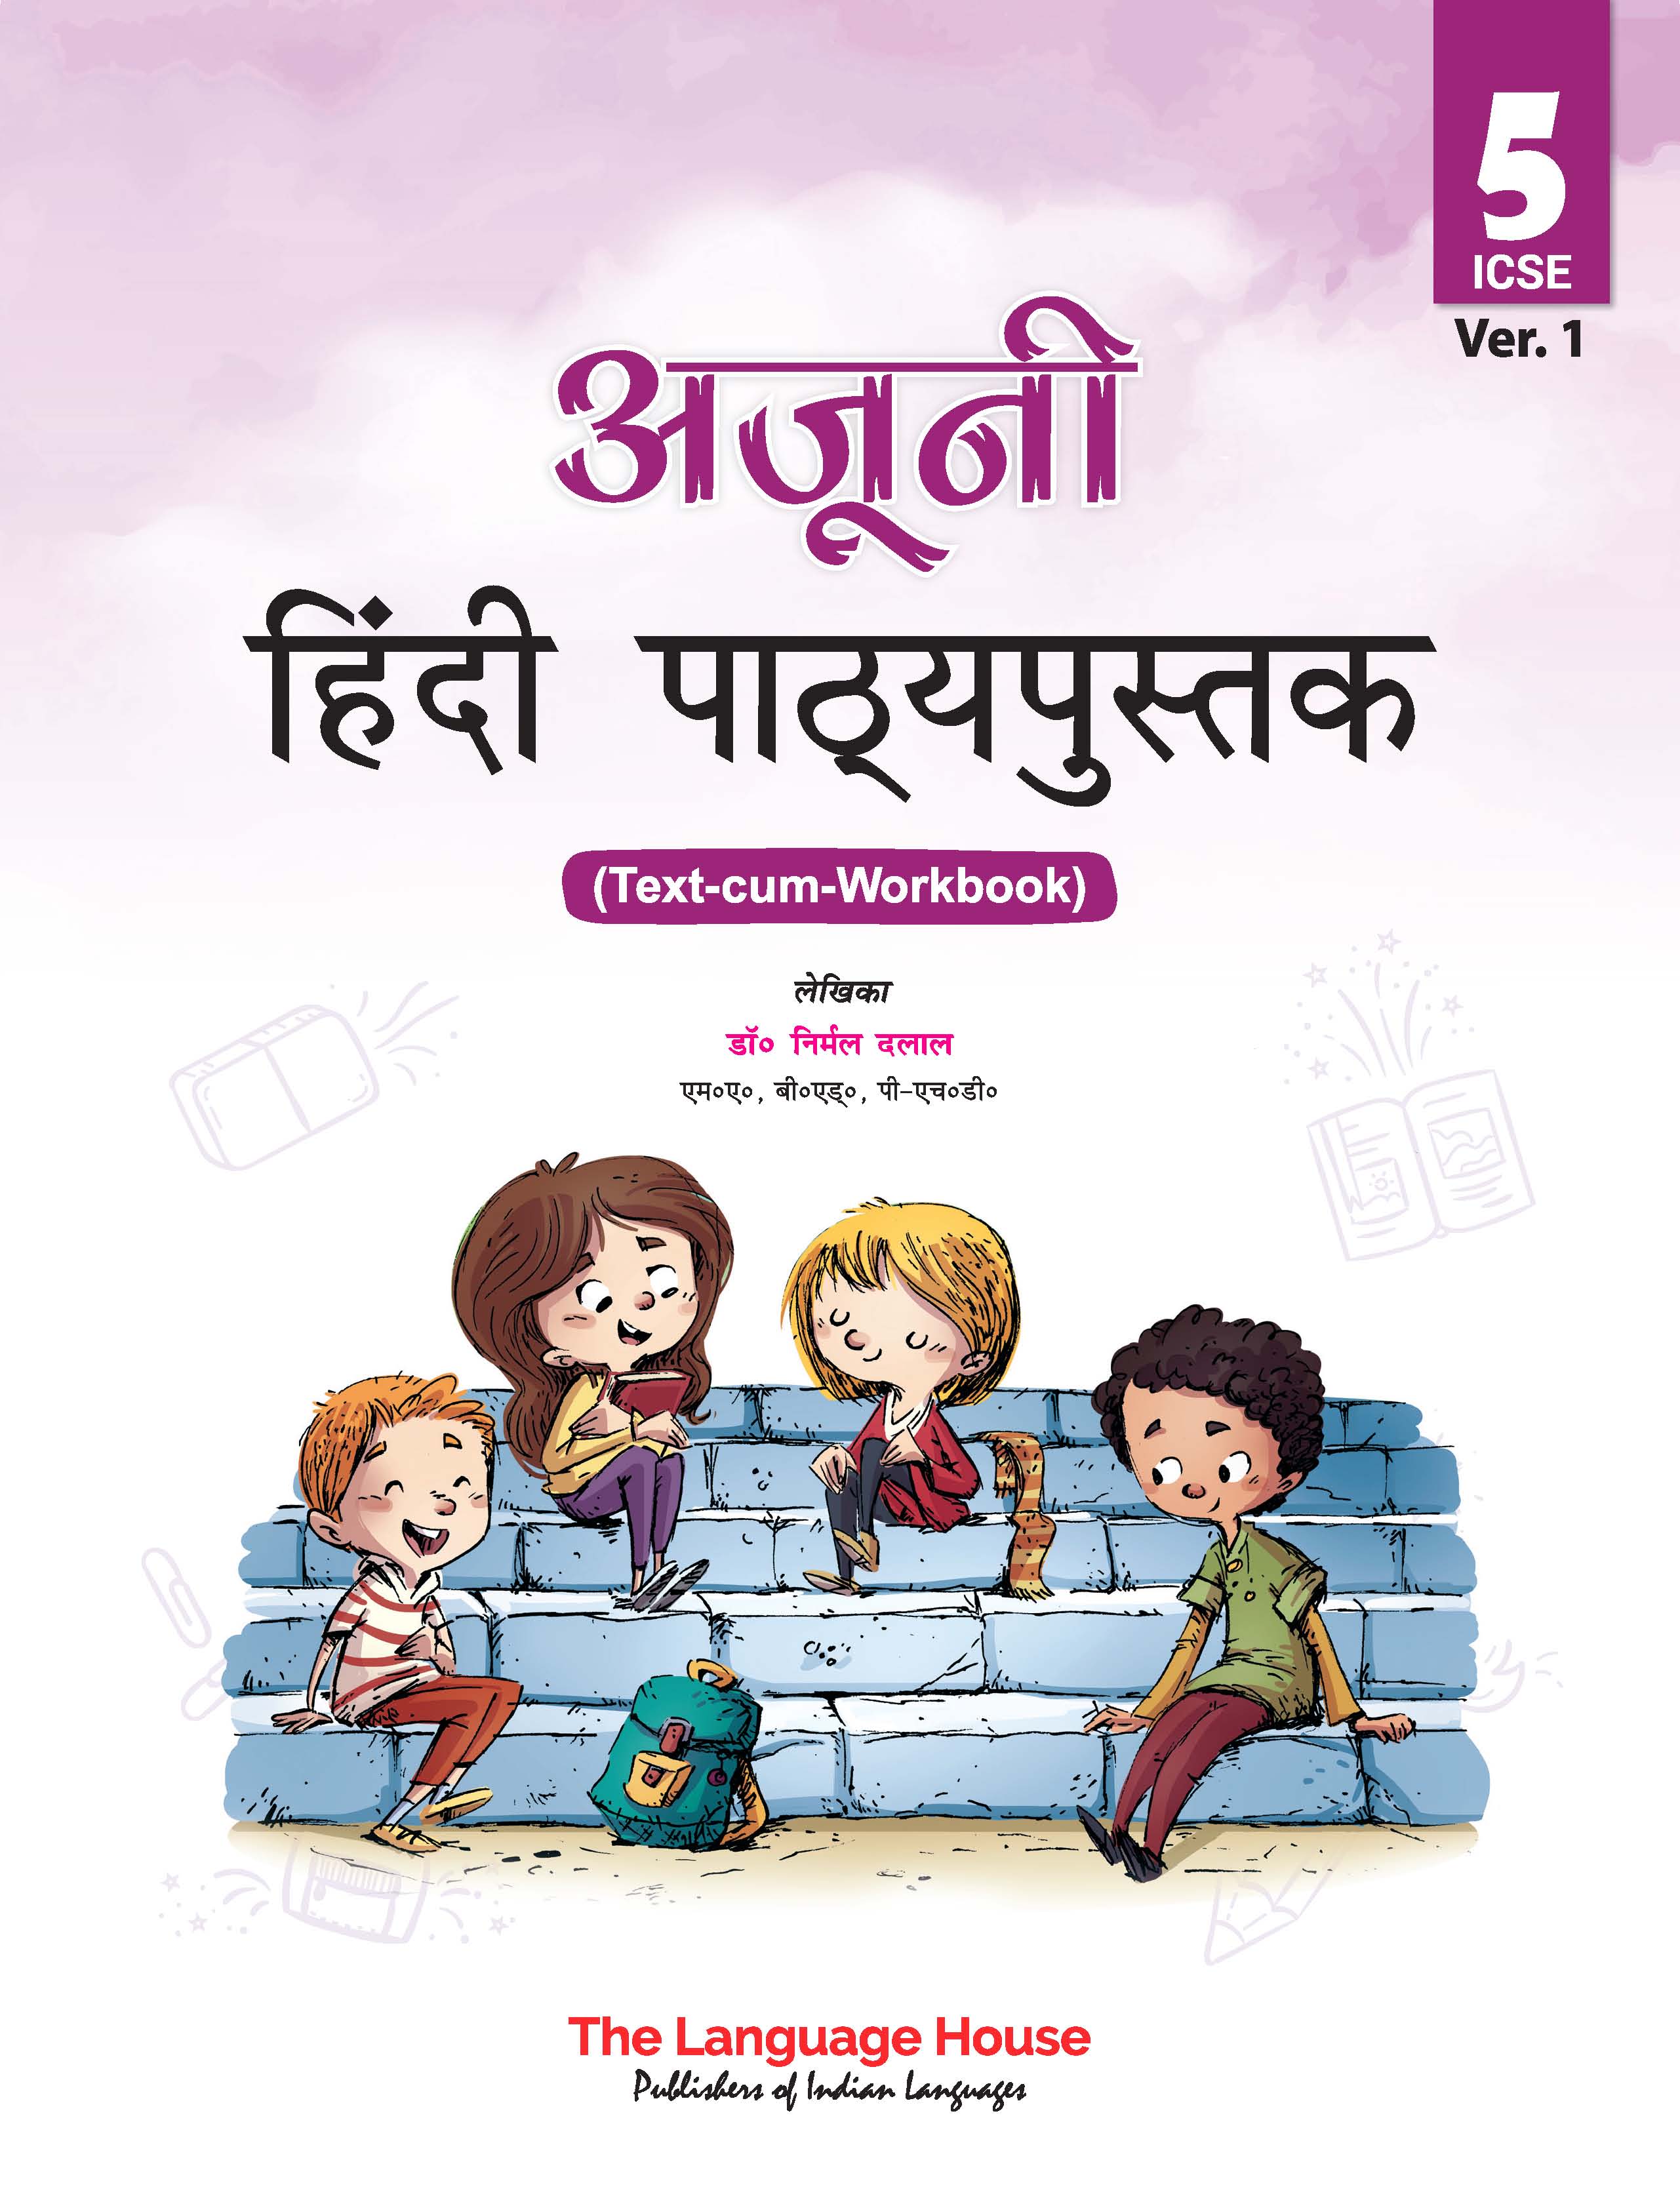 Ajooni Hindi Reader Ver. 1 (ICSE Board) Class 5